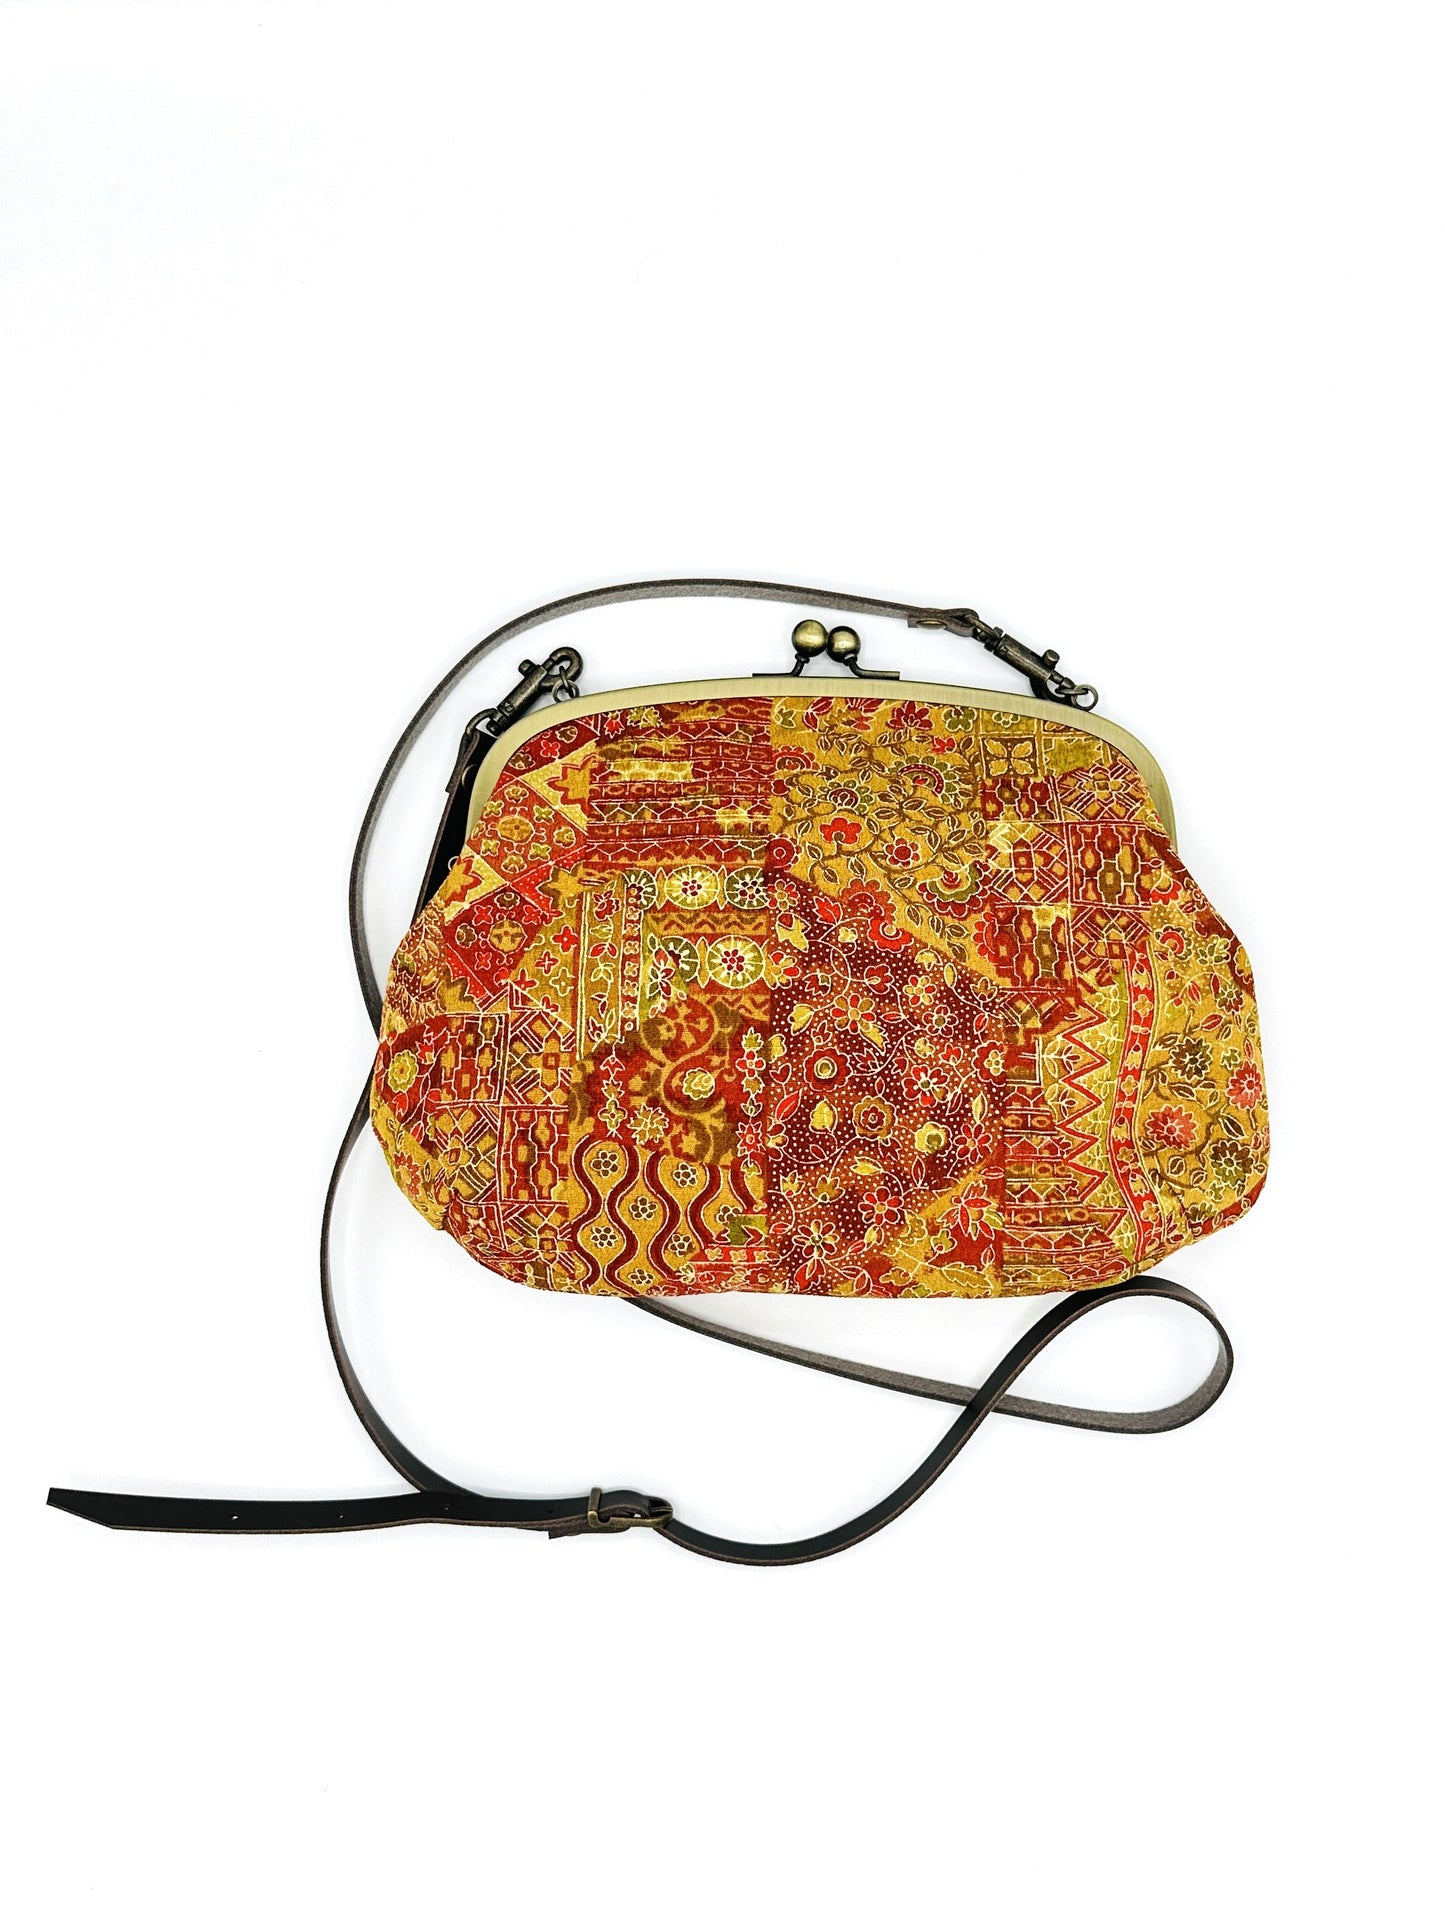 【Gamaguchi-en】 2way-Handbag/Chintz-Muster, Kupplung, Beutel, japanische Tasche, Umhängetasche, japanische Geschenke